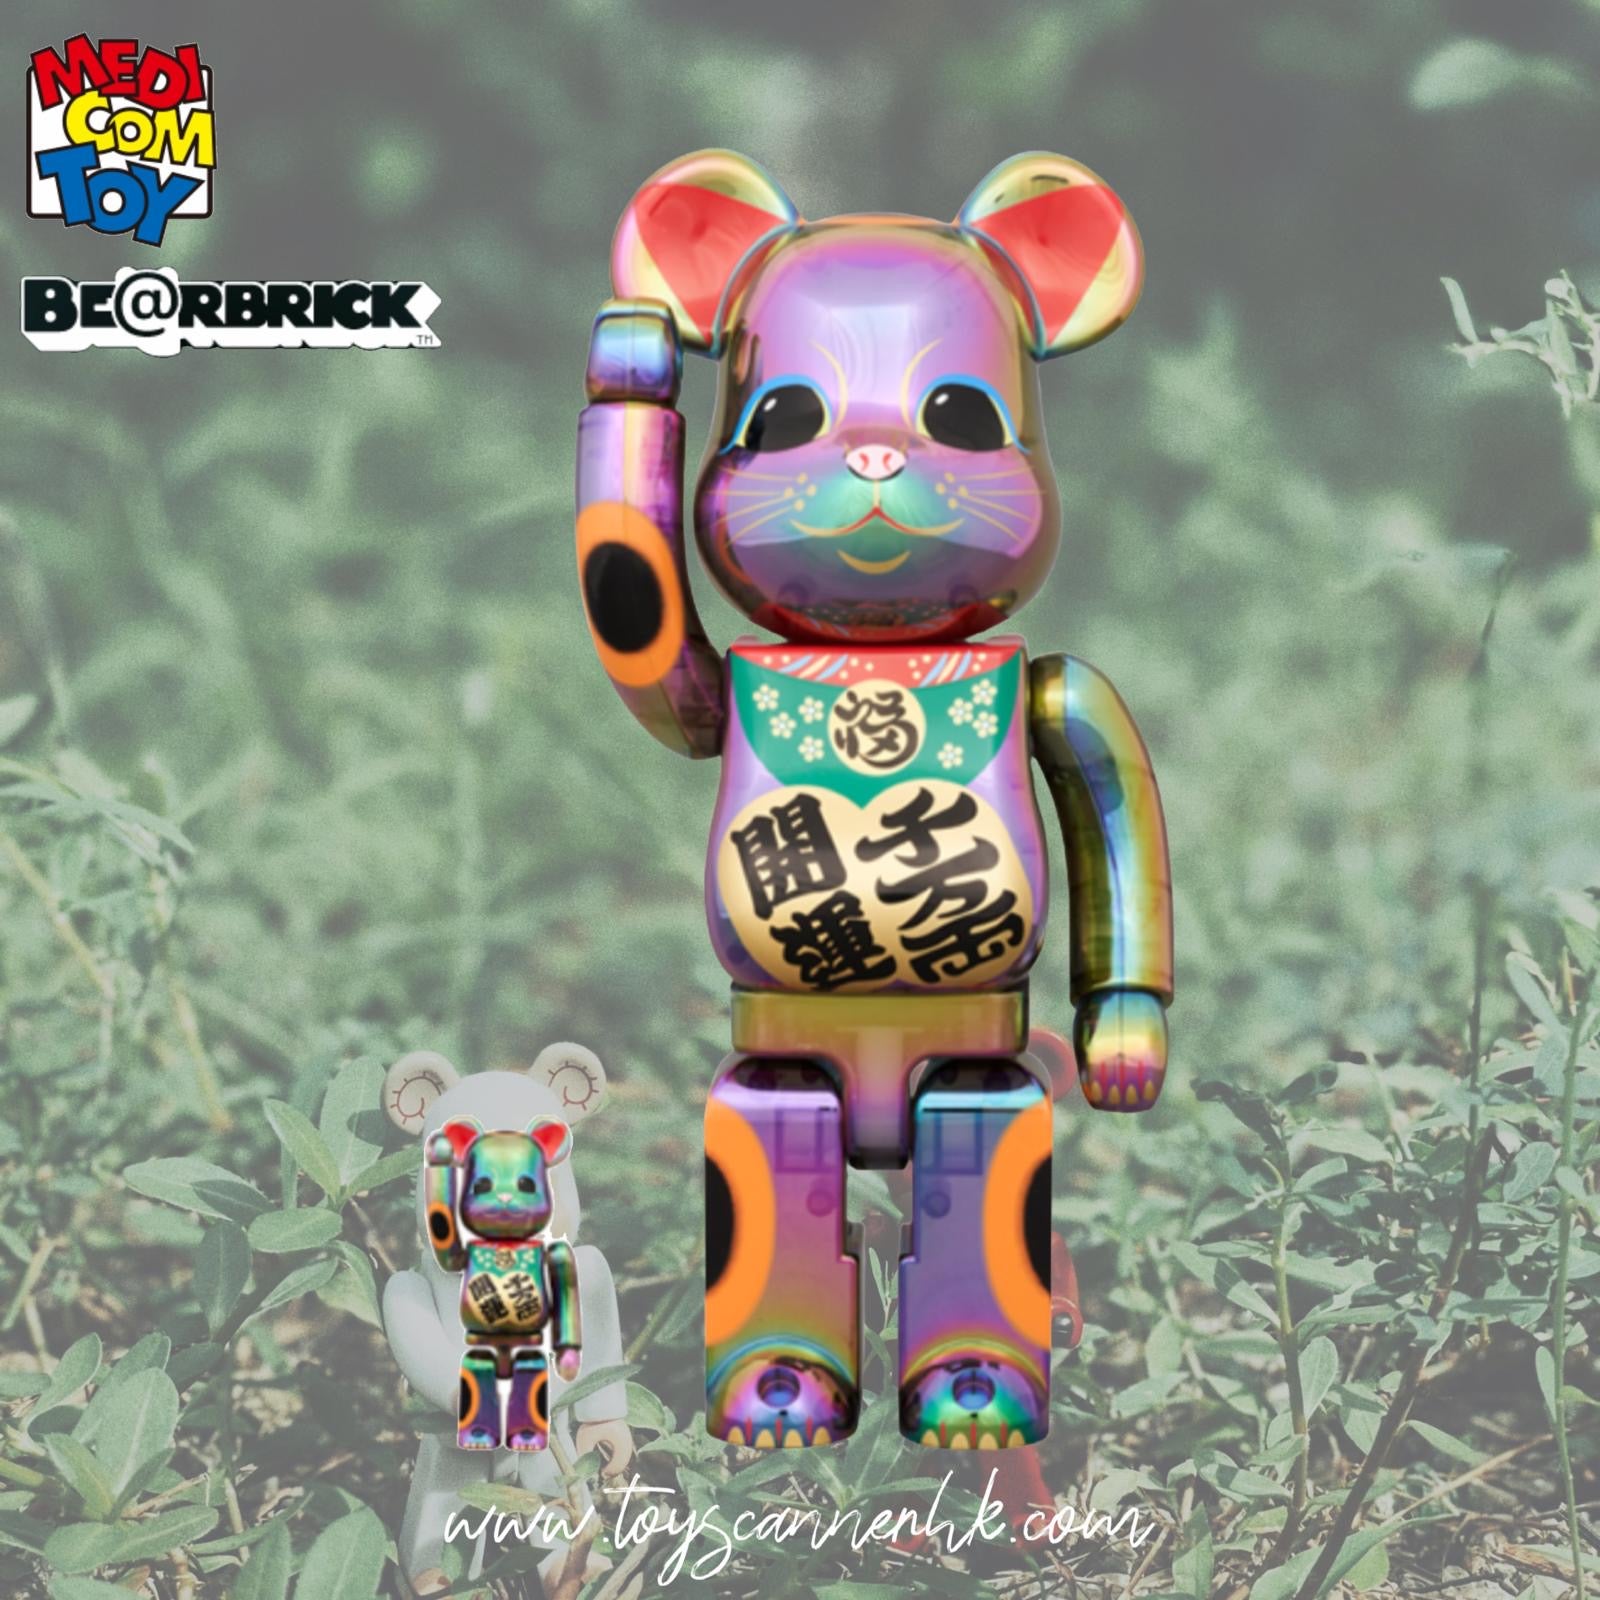 Pre-order BE@RBRICK – ToyScannerhk